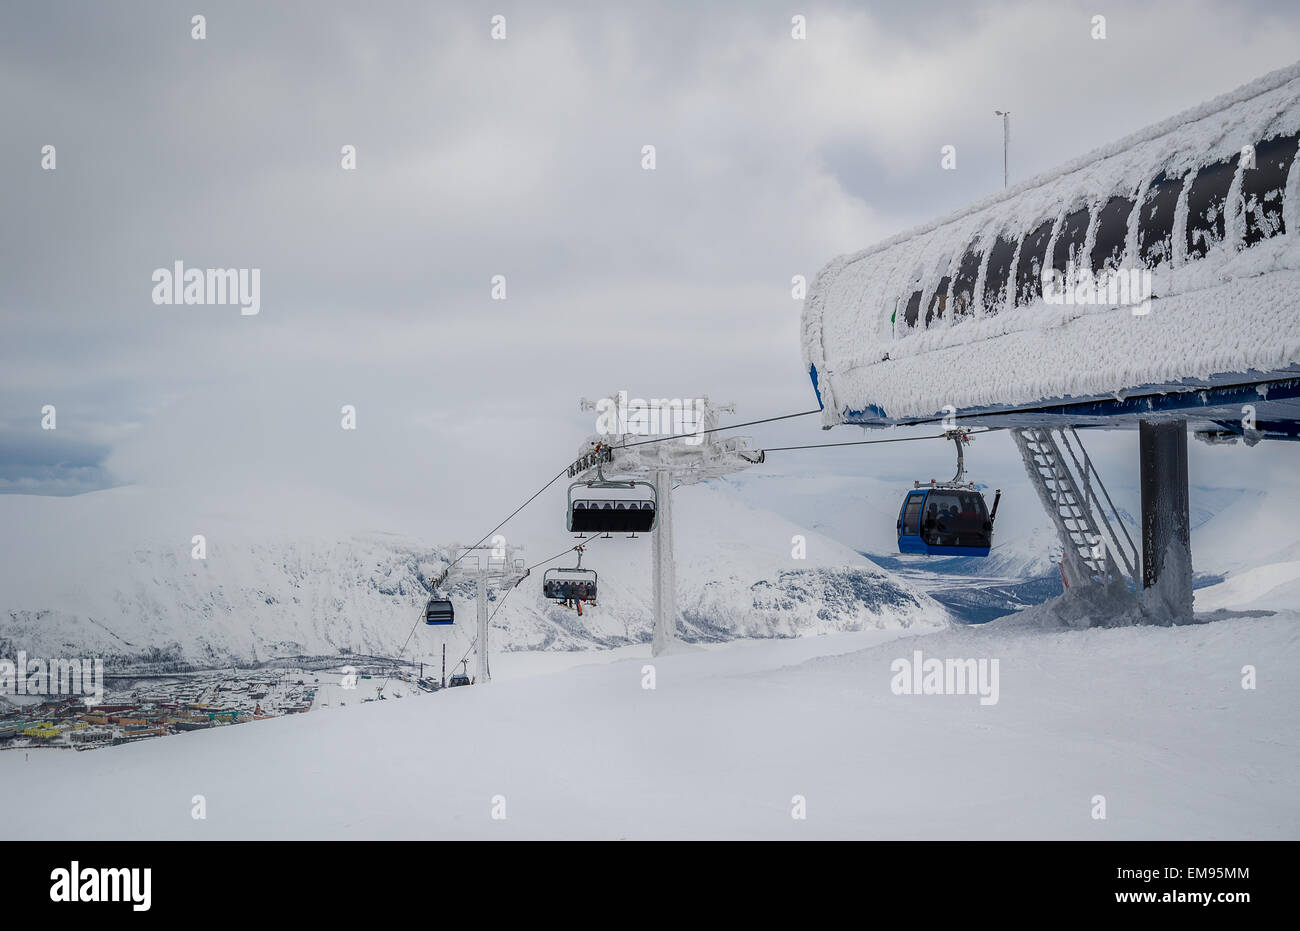 Ski resort landscape Stock Photo